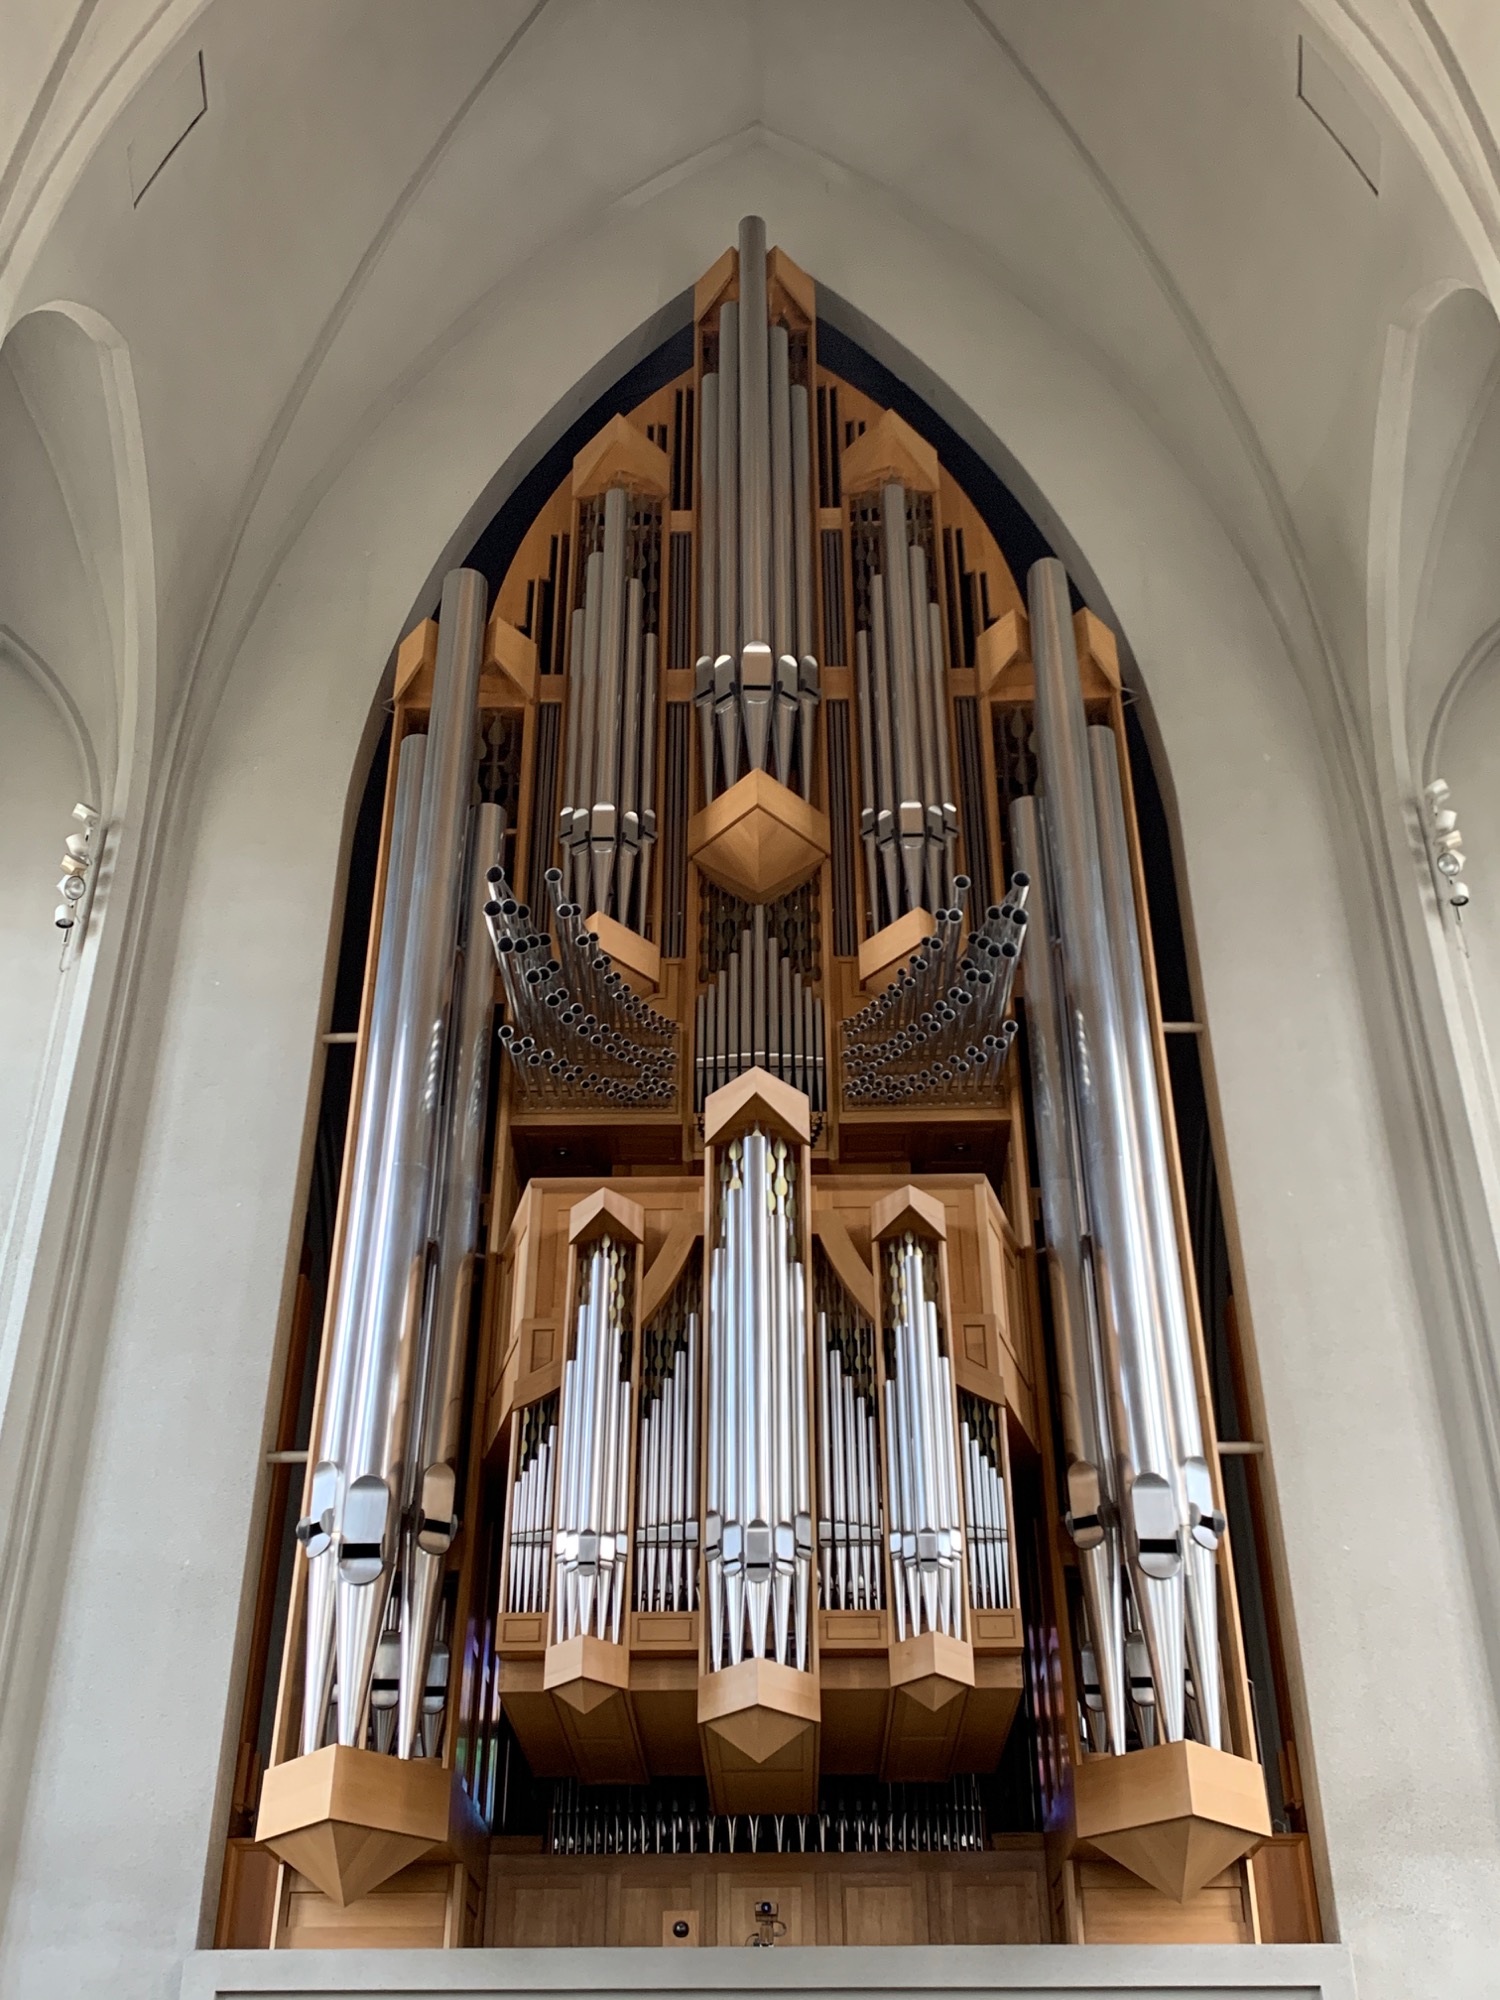 a pipe organ in a church